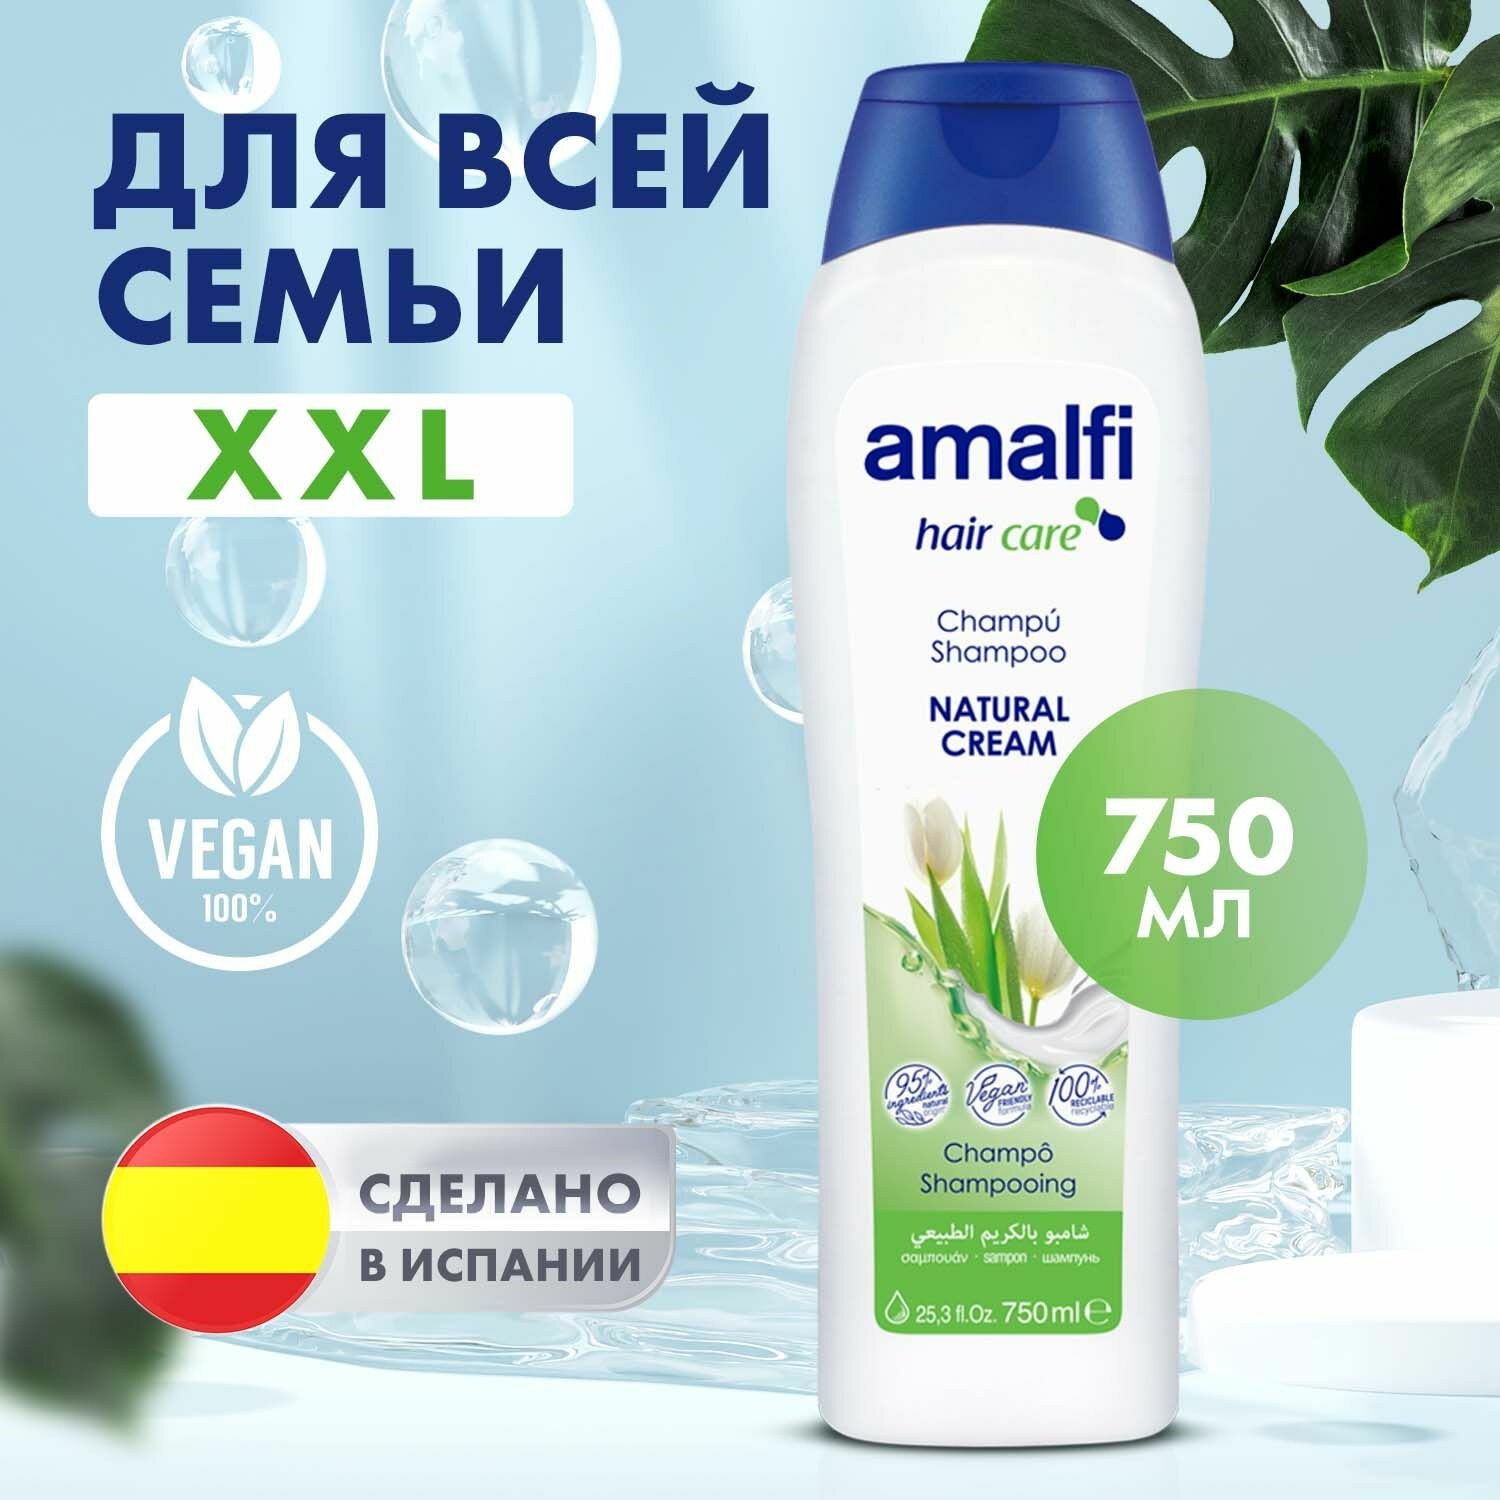 AMALFI Шампунь д/в "AMALFI"(natural cream)750мл